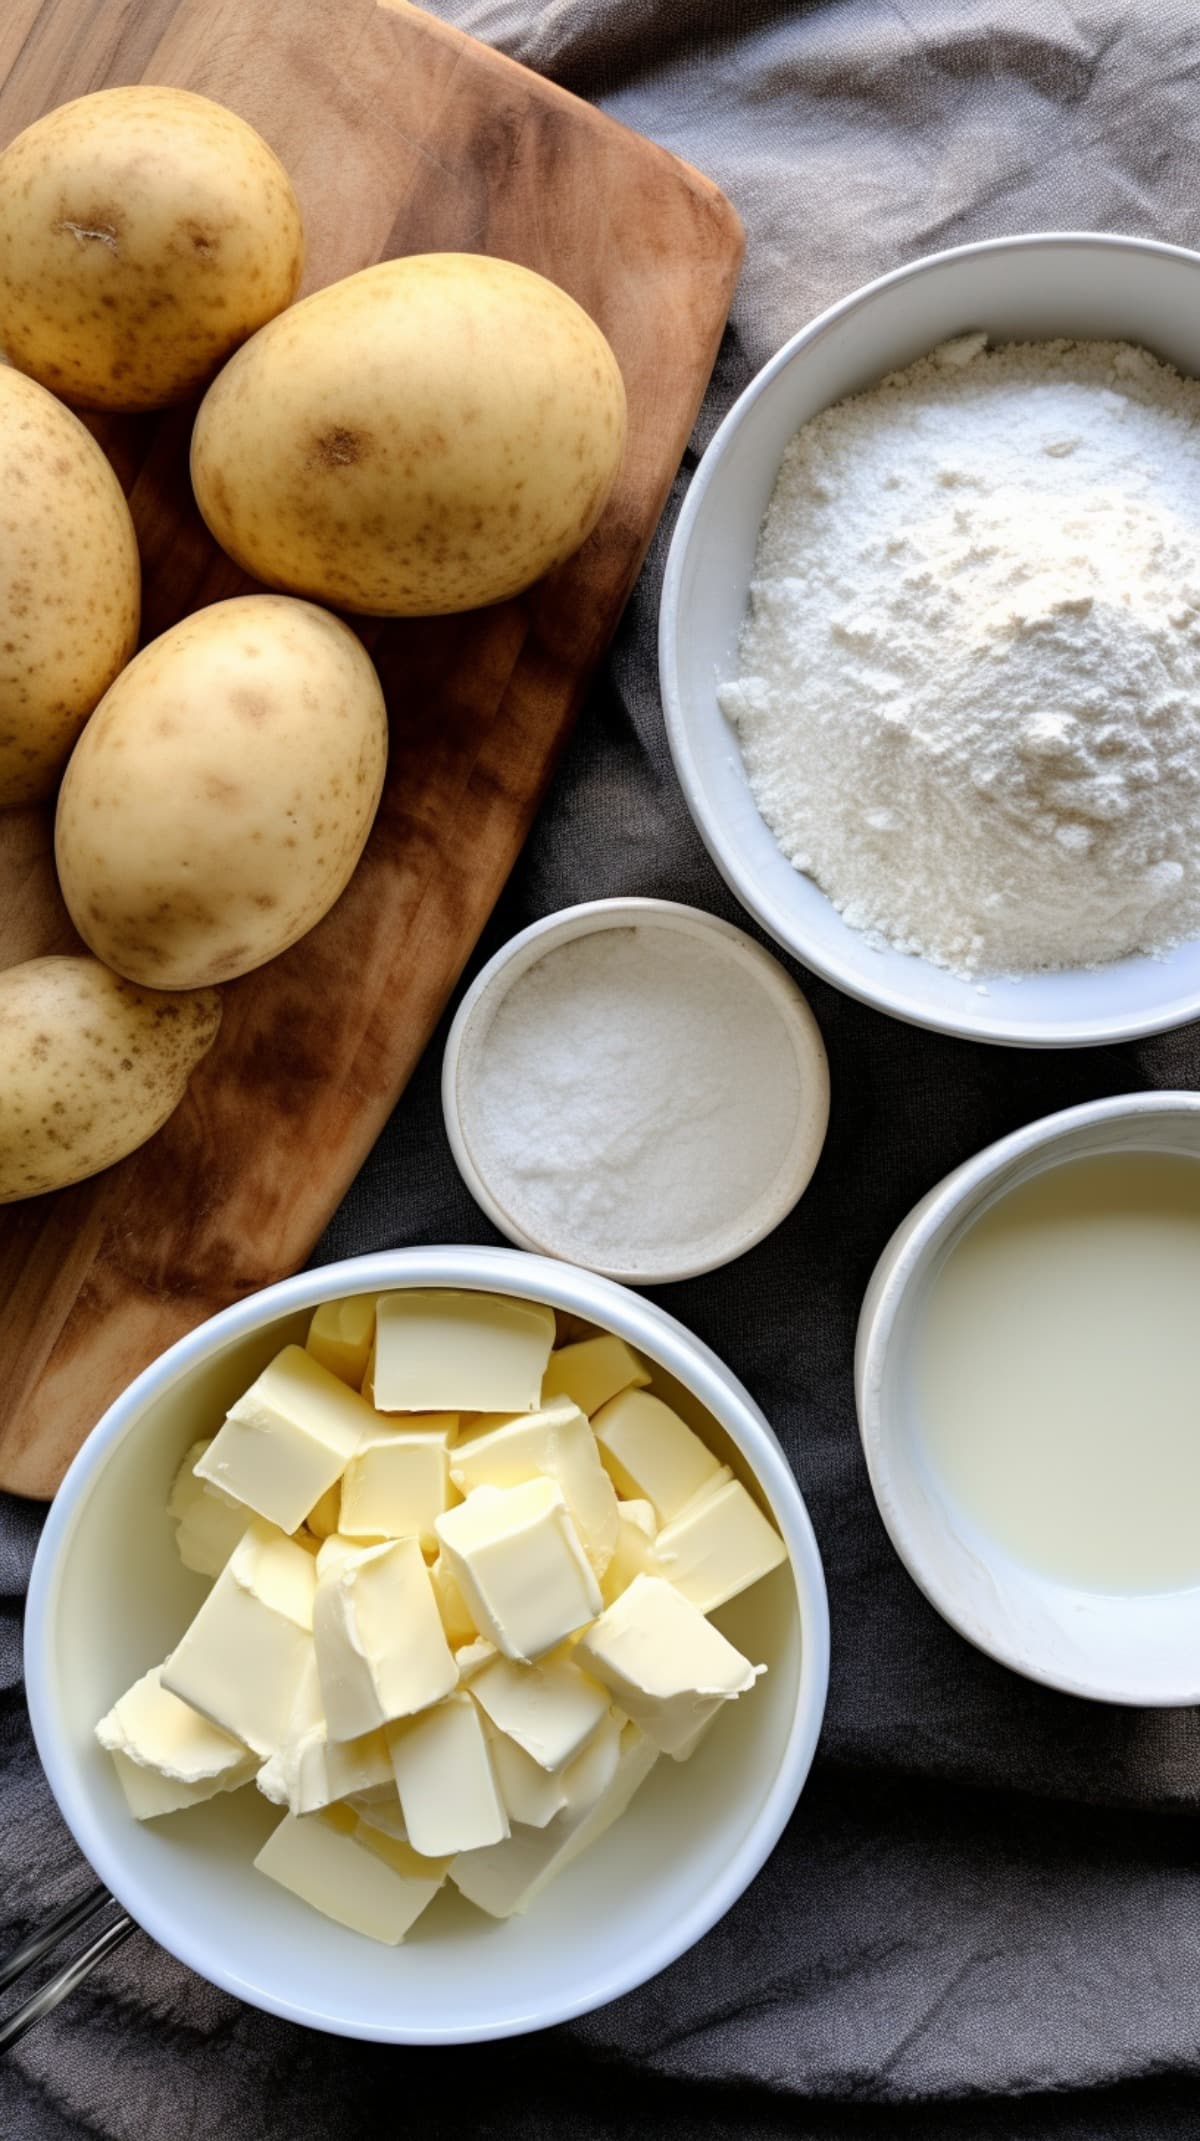 Ingredients for scalloped potatoes: Yukon Gold potatoes, flour, butter, salt, milk 